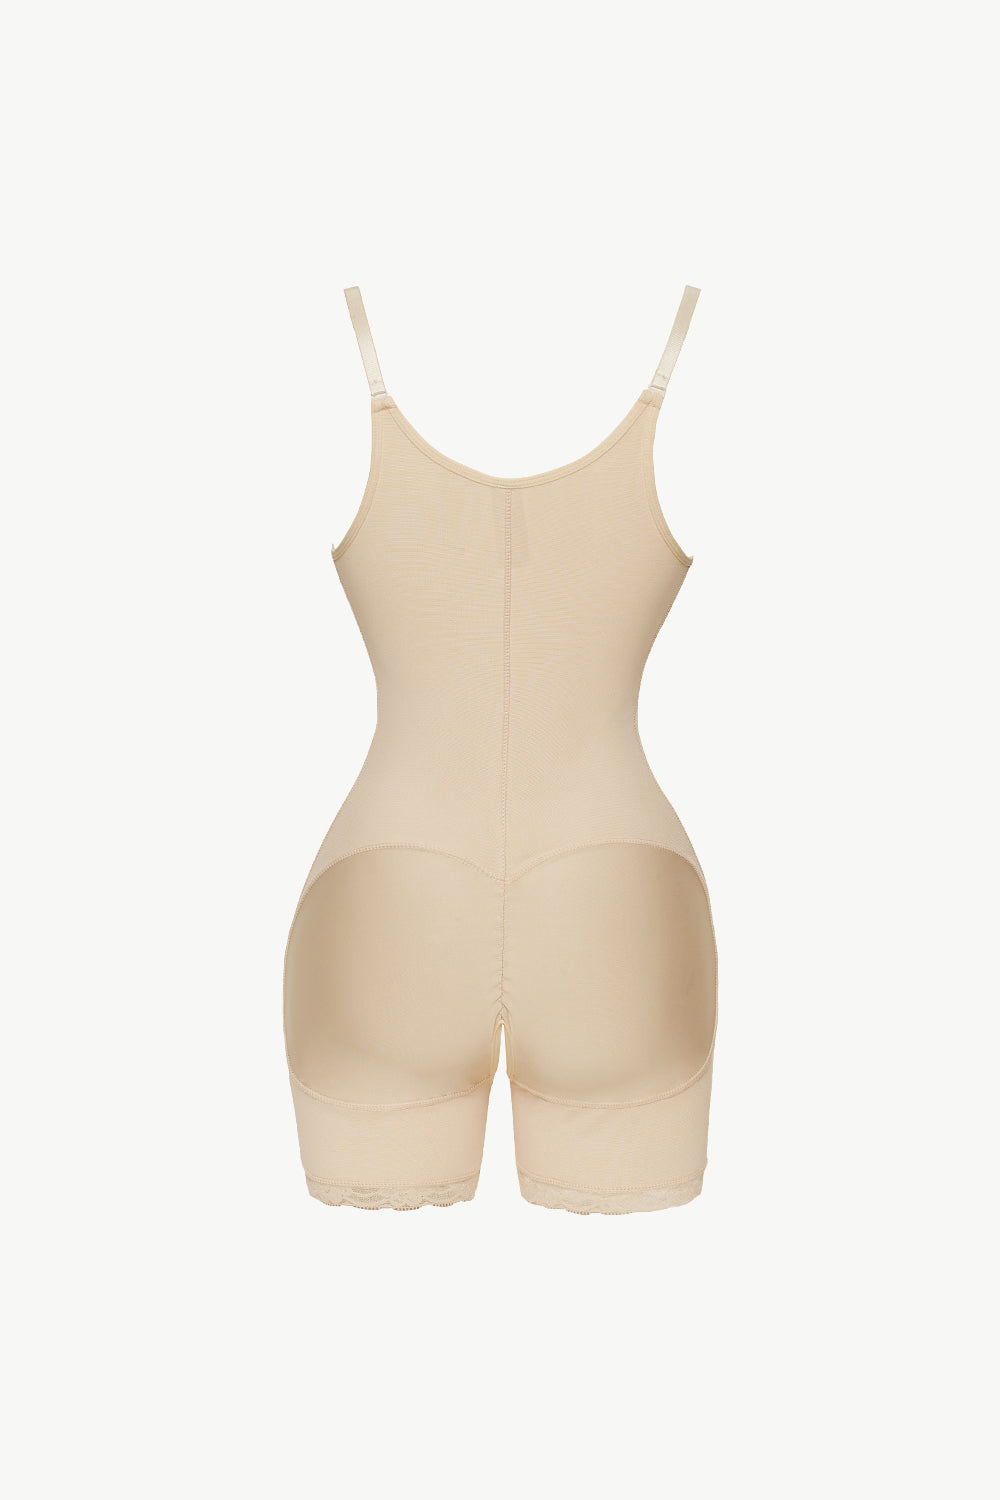 Full Size Side Zipper Under-Bust Shaping Bodysuit - DromedarShop.com Online Boutique